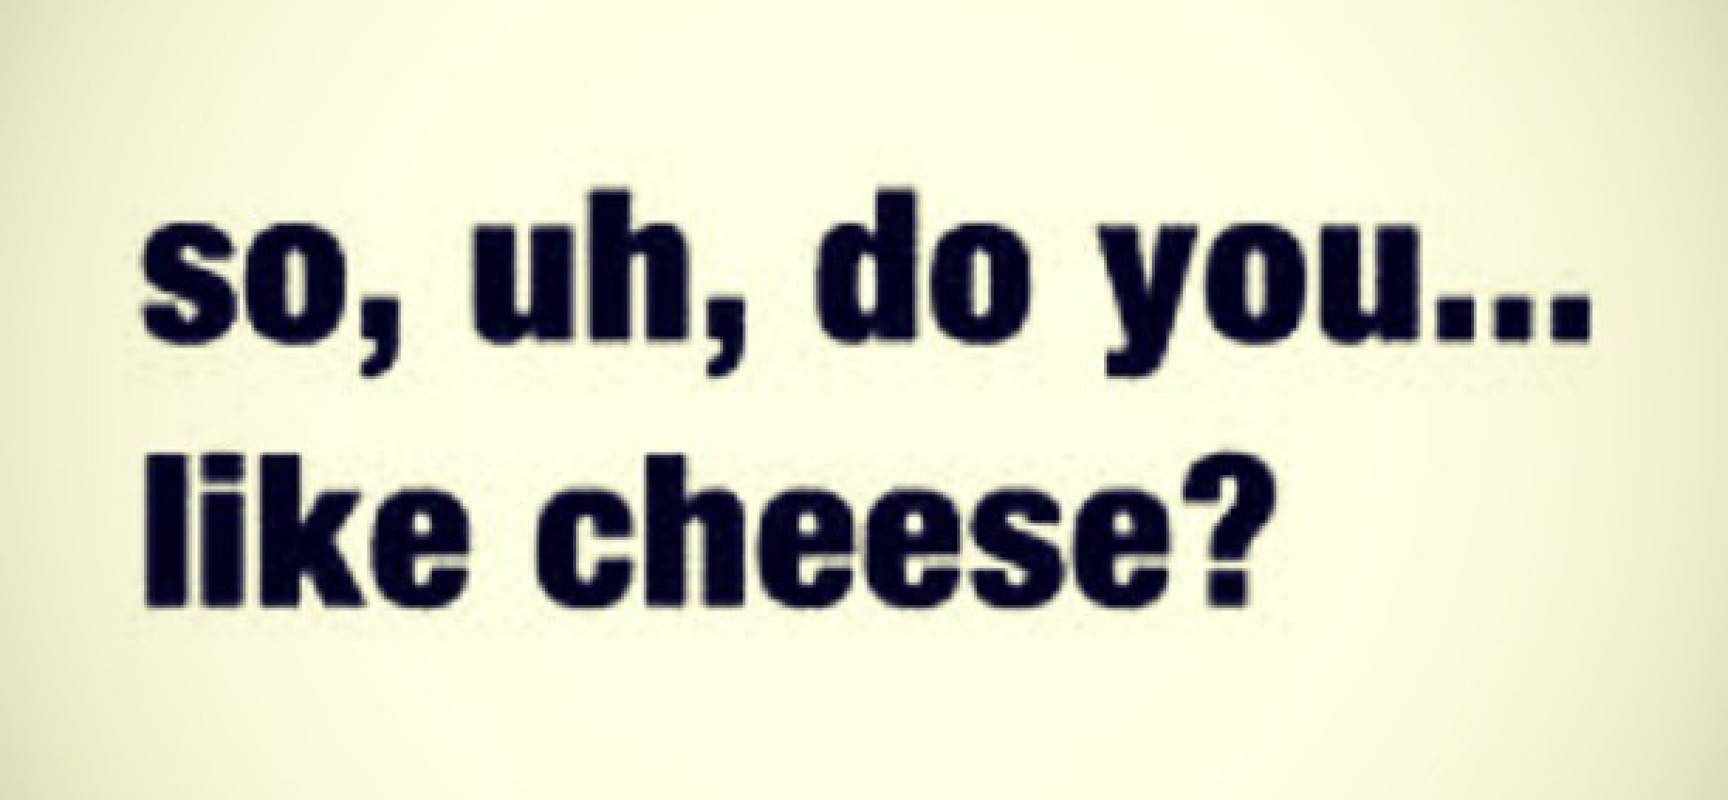 Say Cheese, Eat cheese, Love cheese!